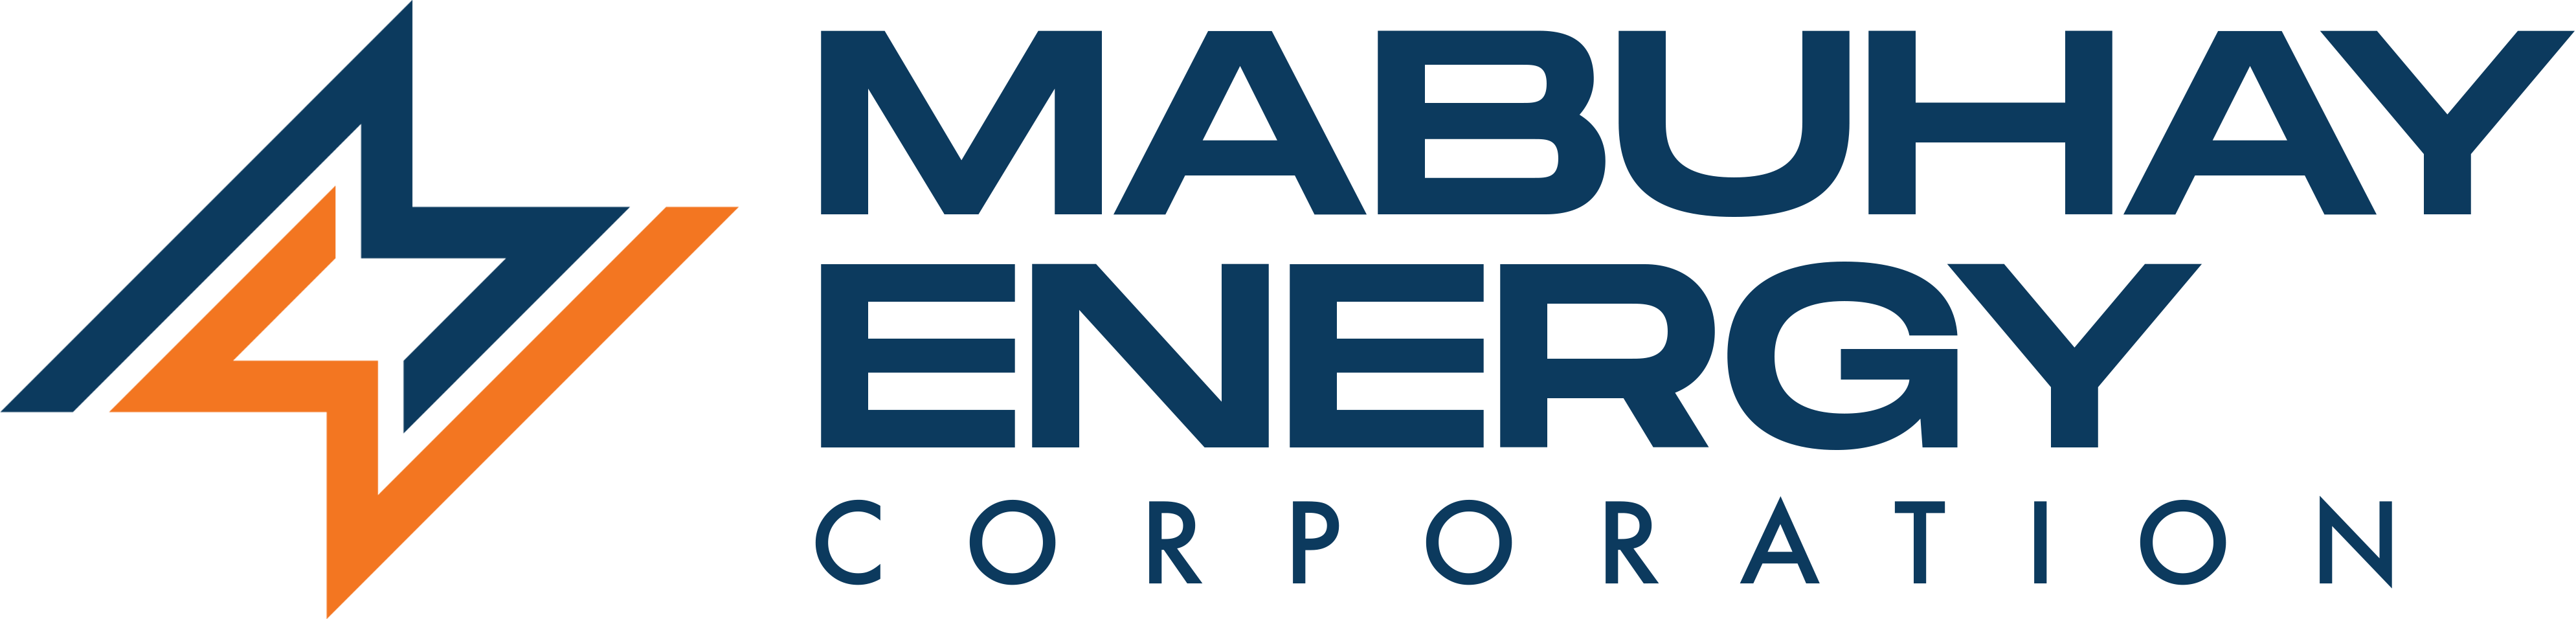 Mabuhay Energy Corporation